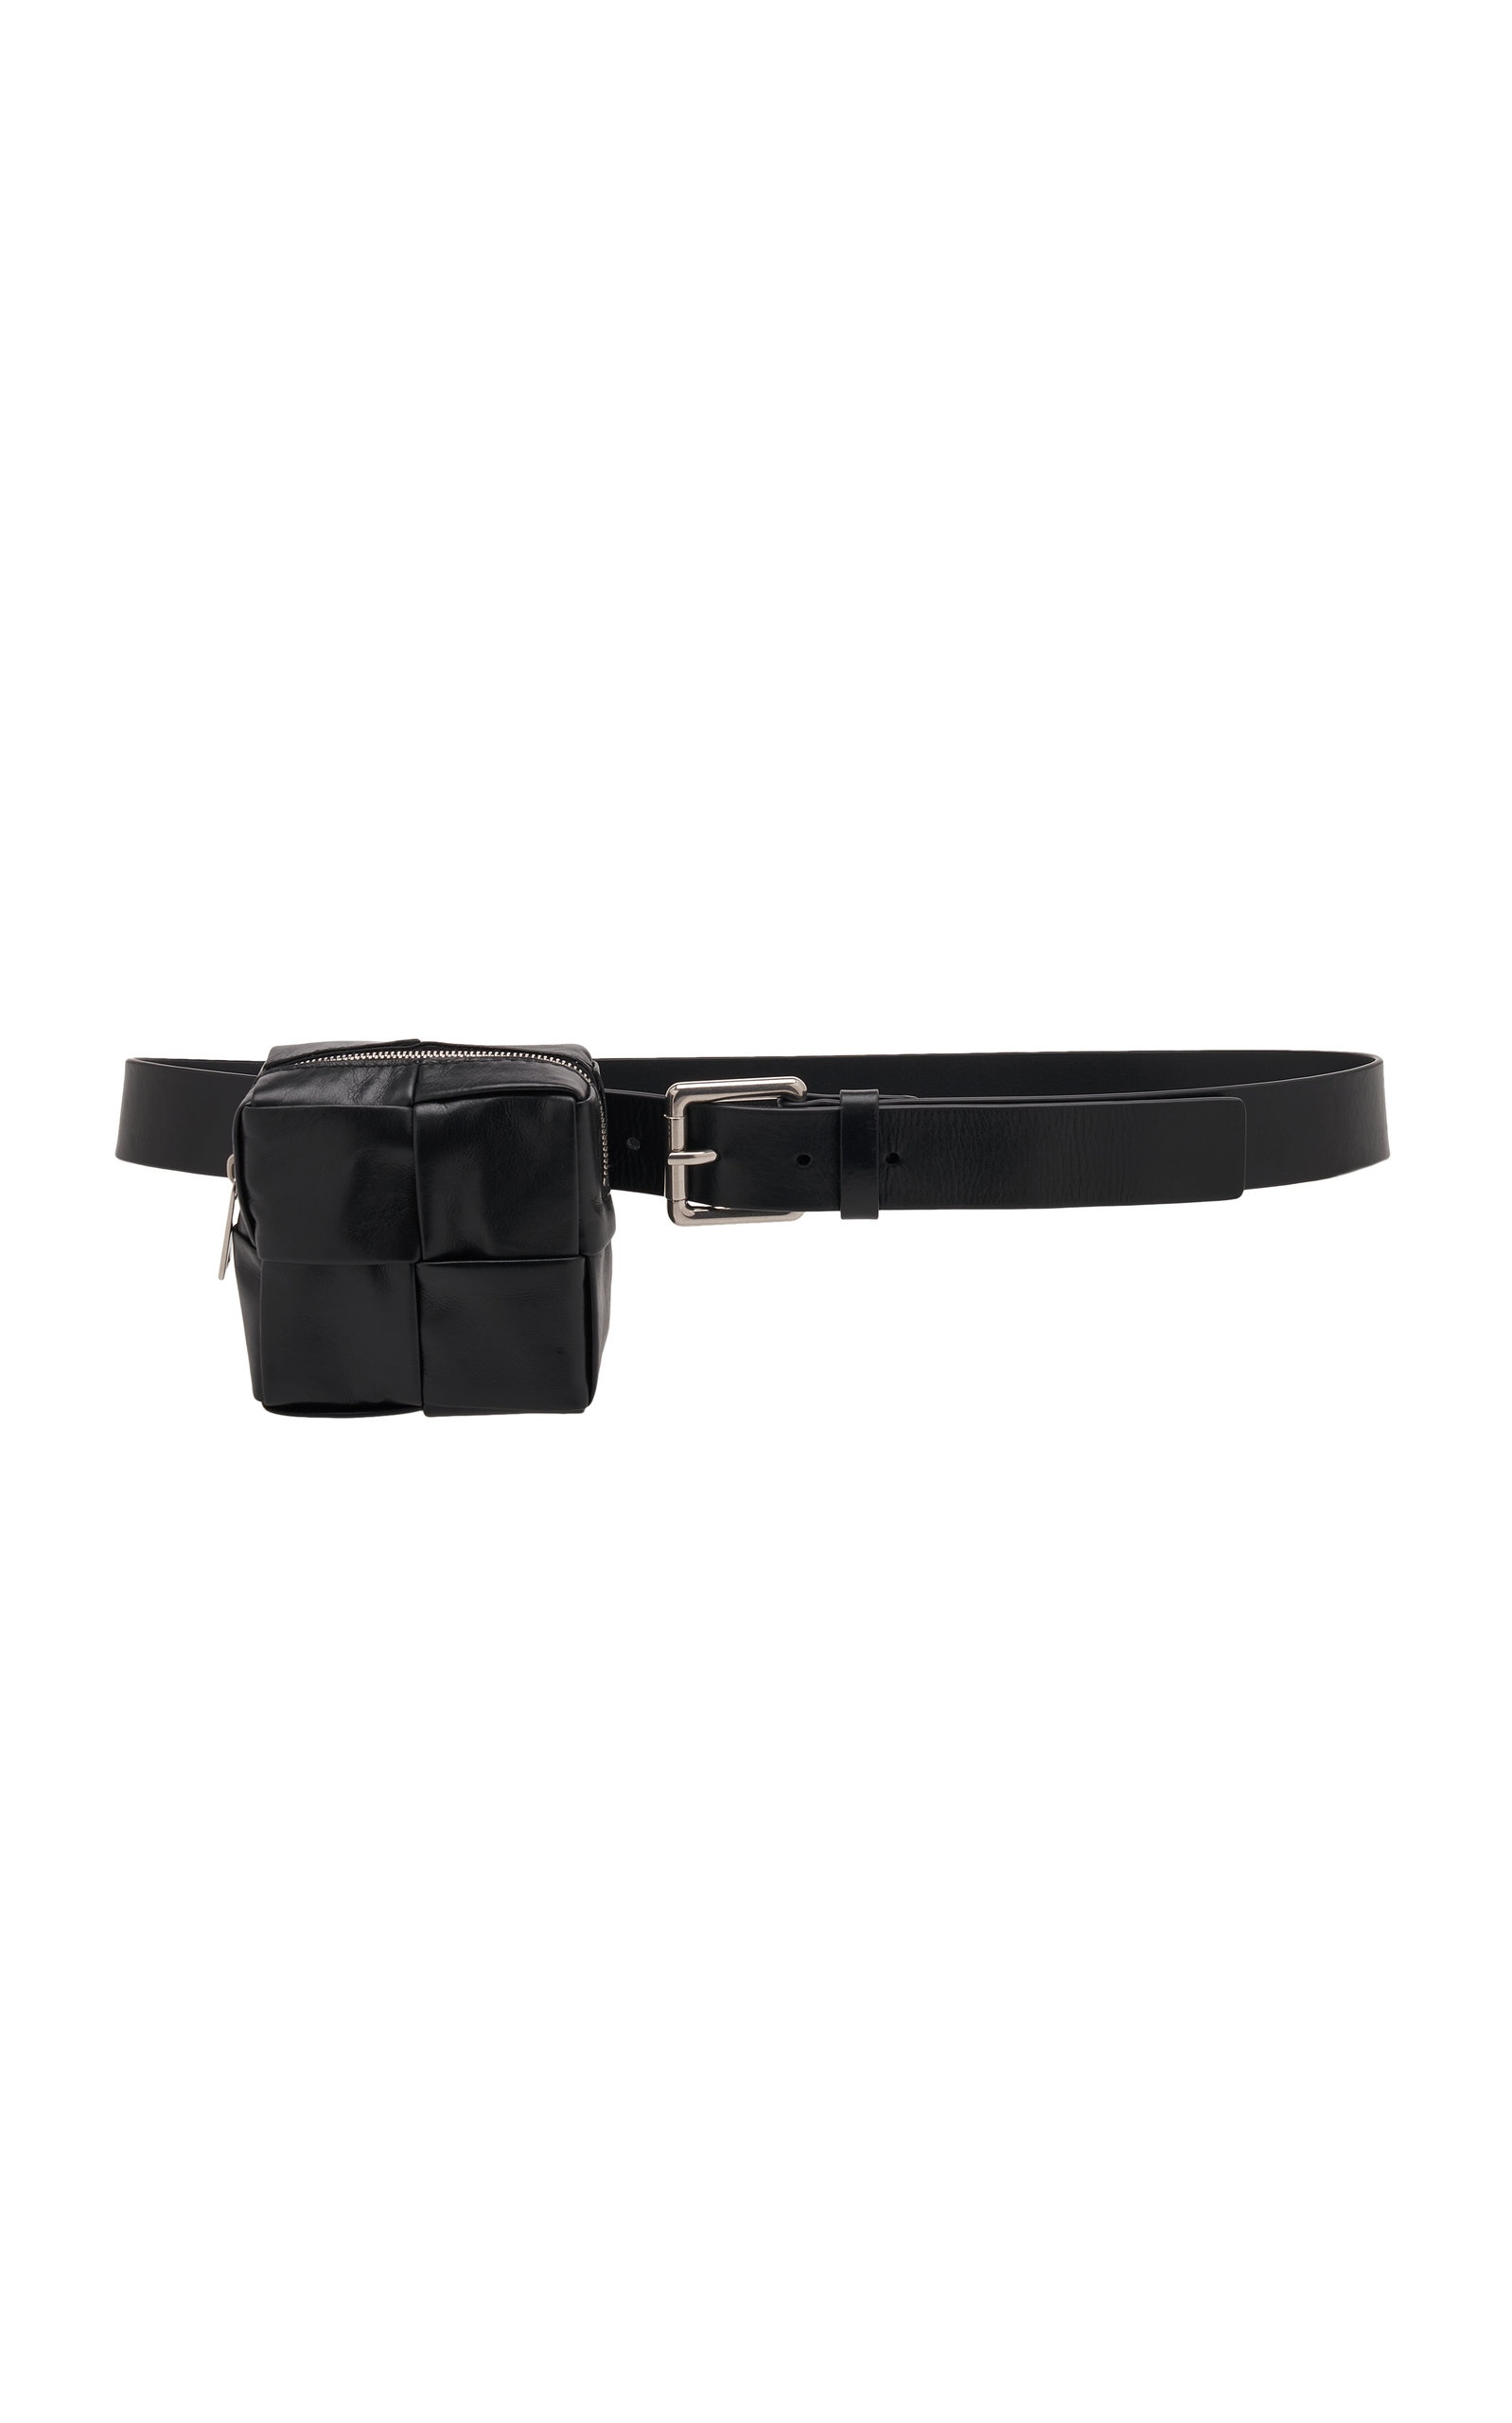 Cassette Pouch Leather Waist Belt black - 1